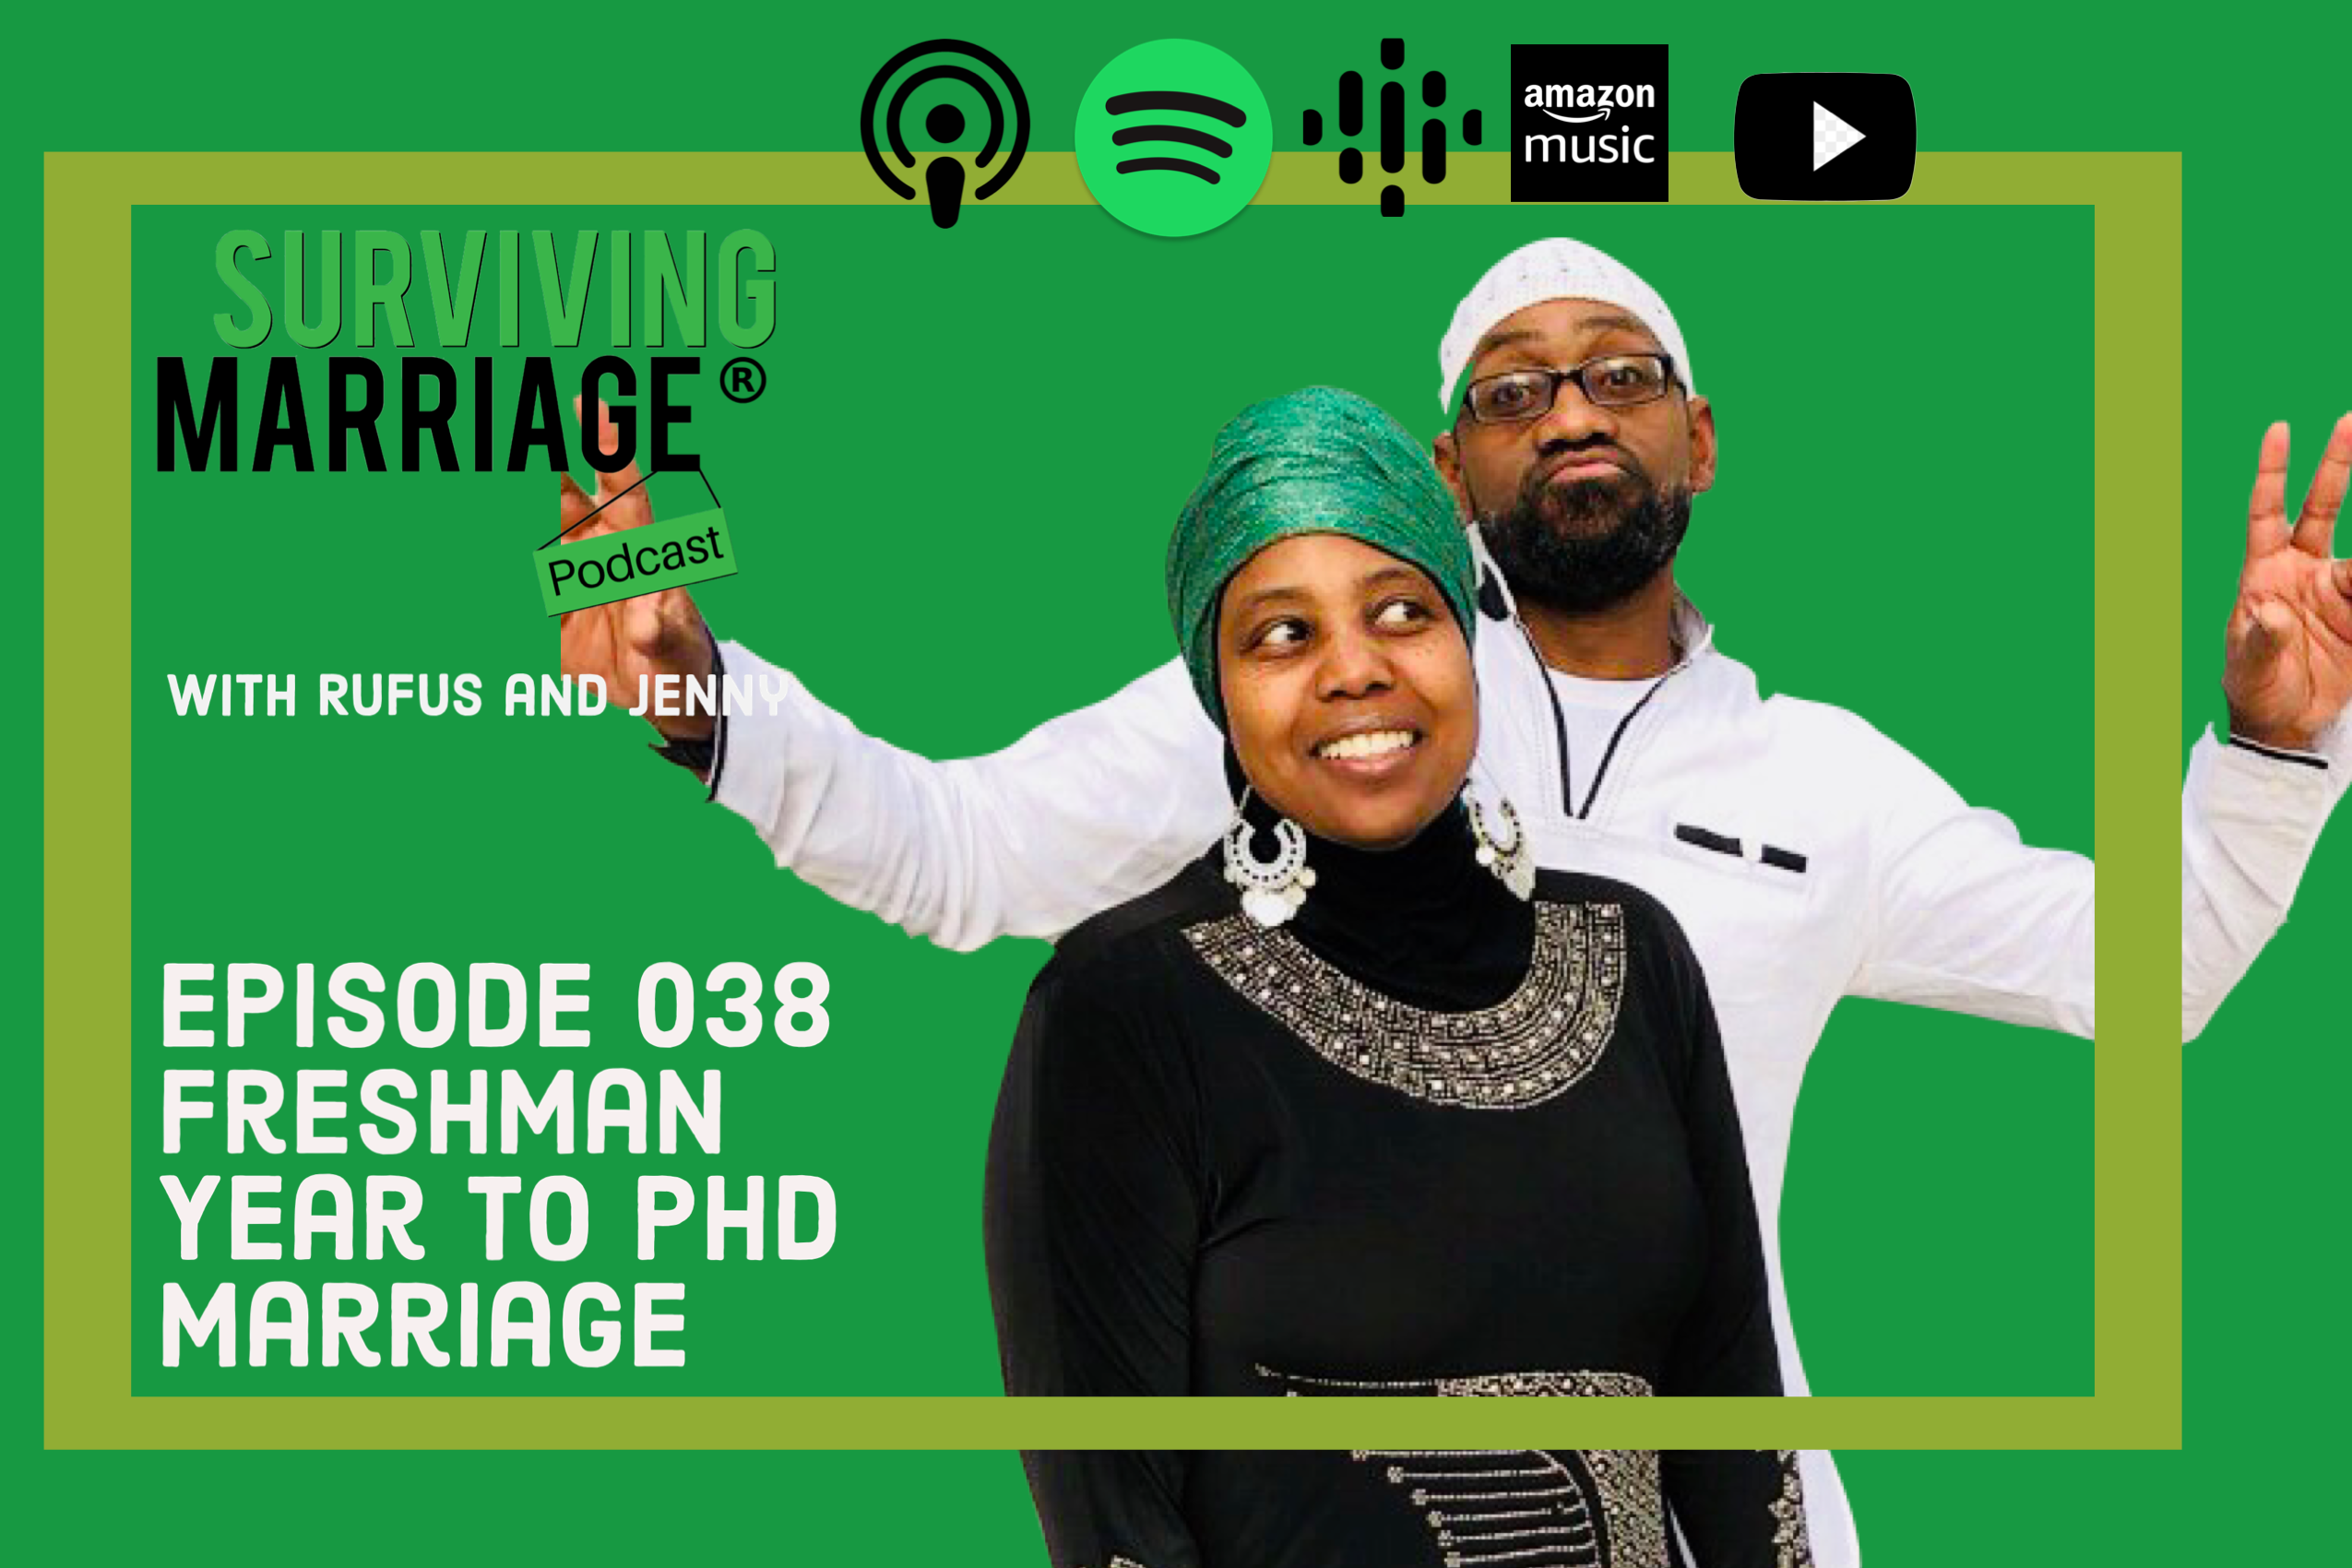 #SurvivingMarriage – Freshman Year to PhD Marriage